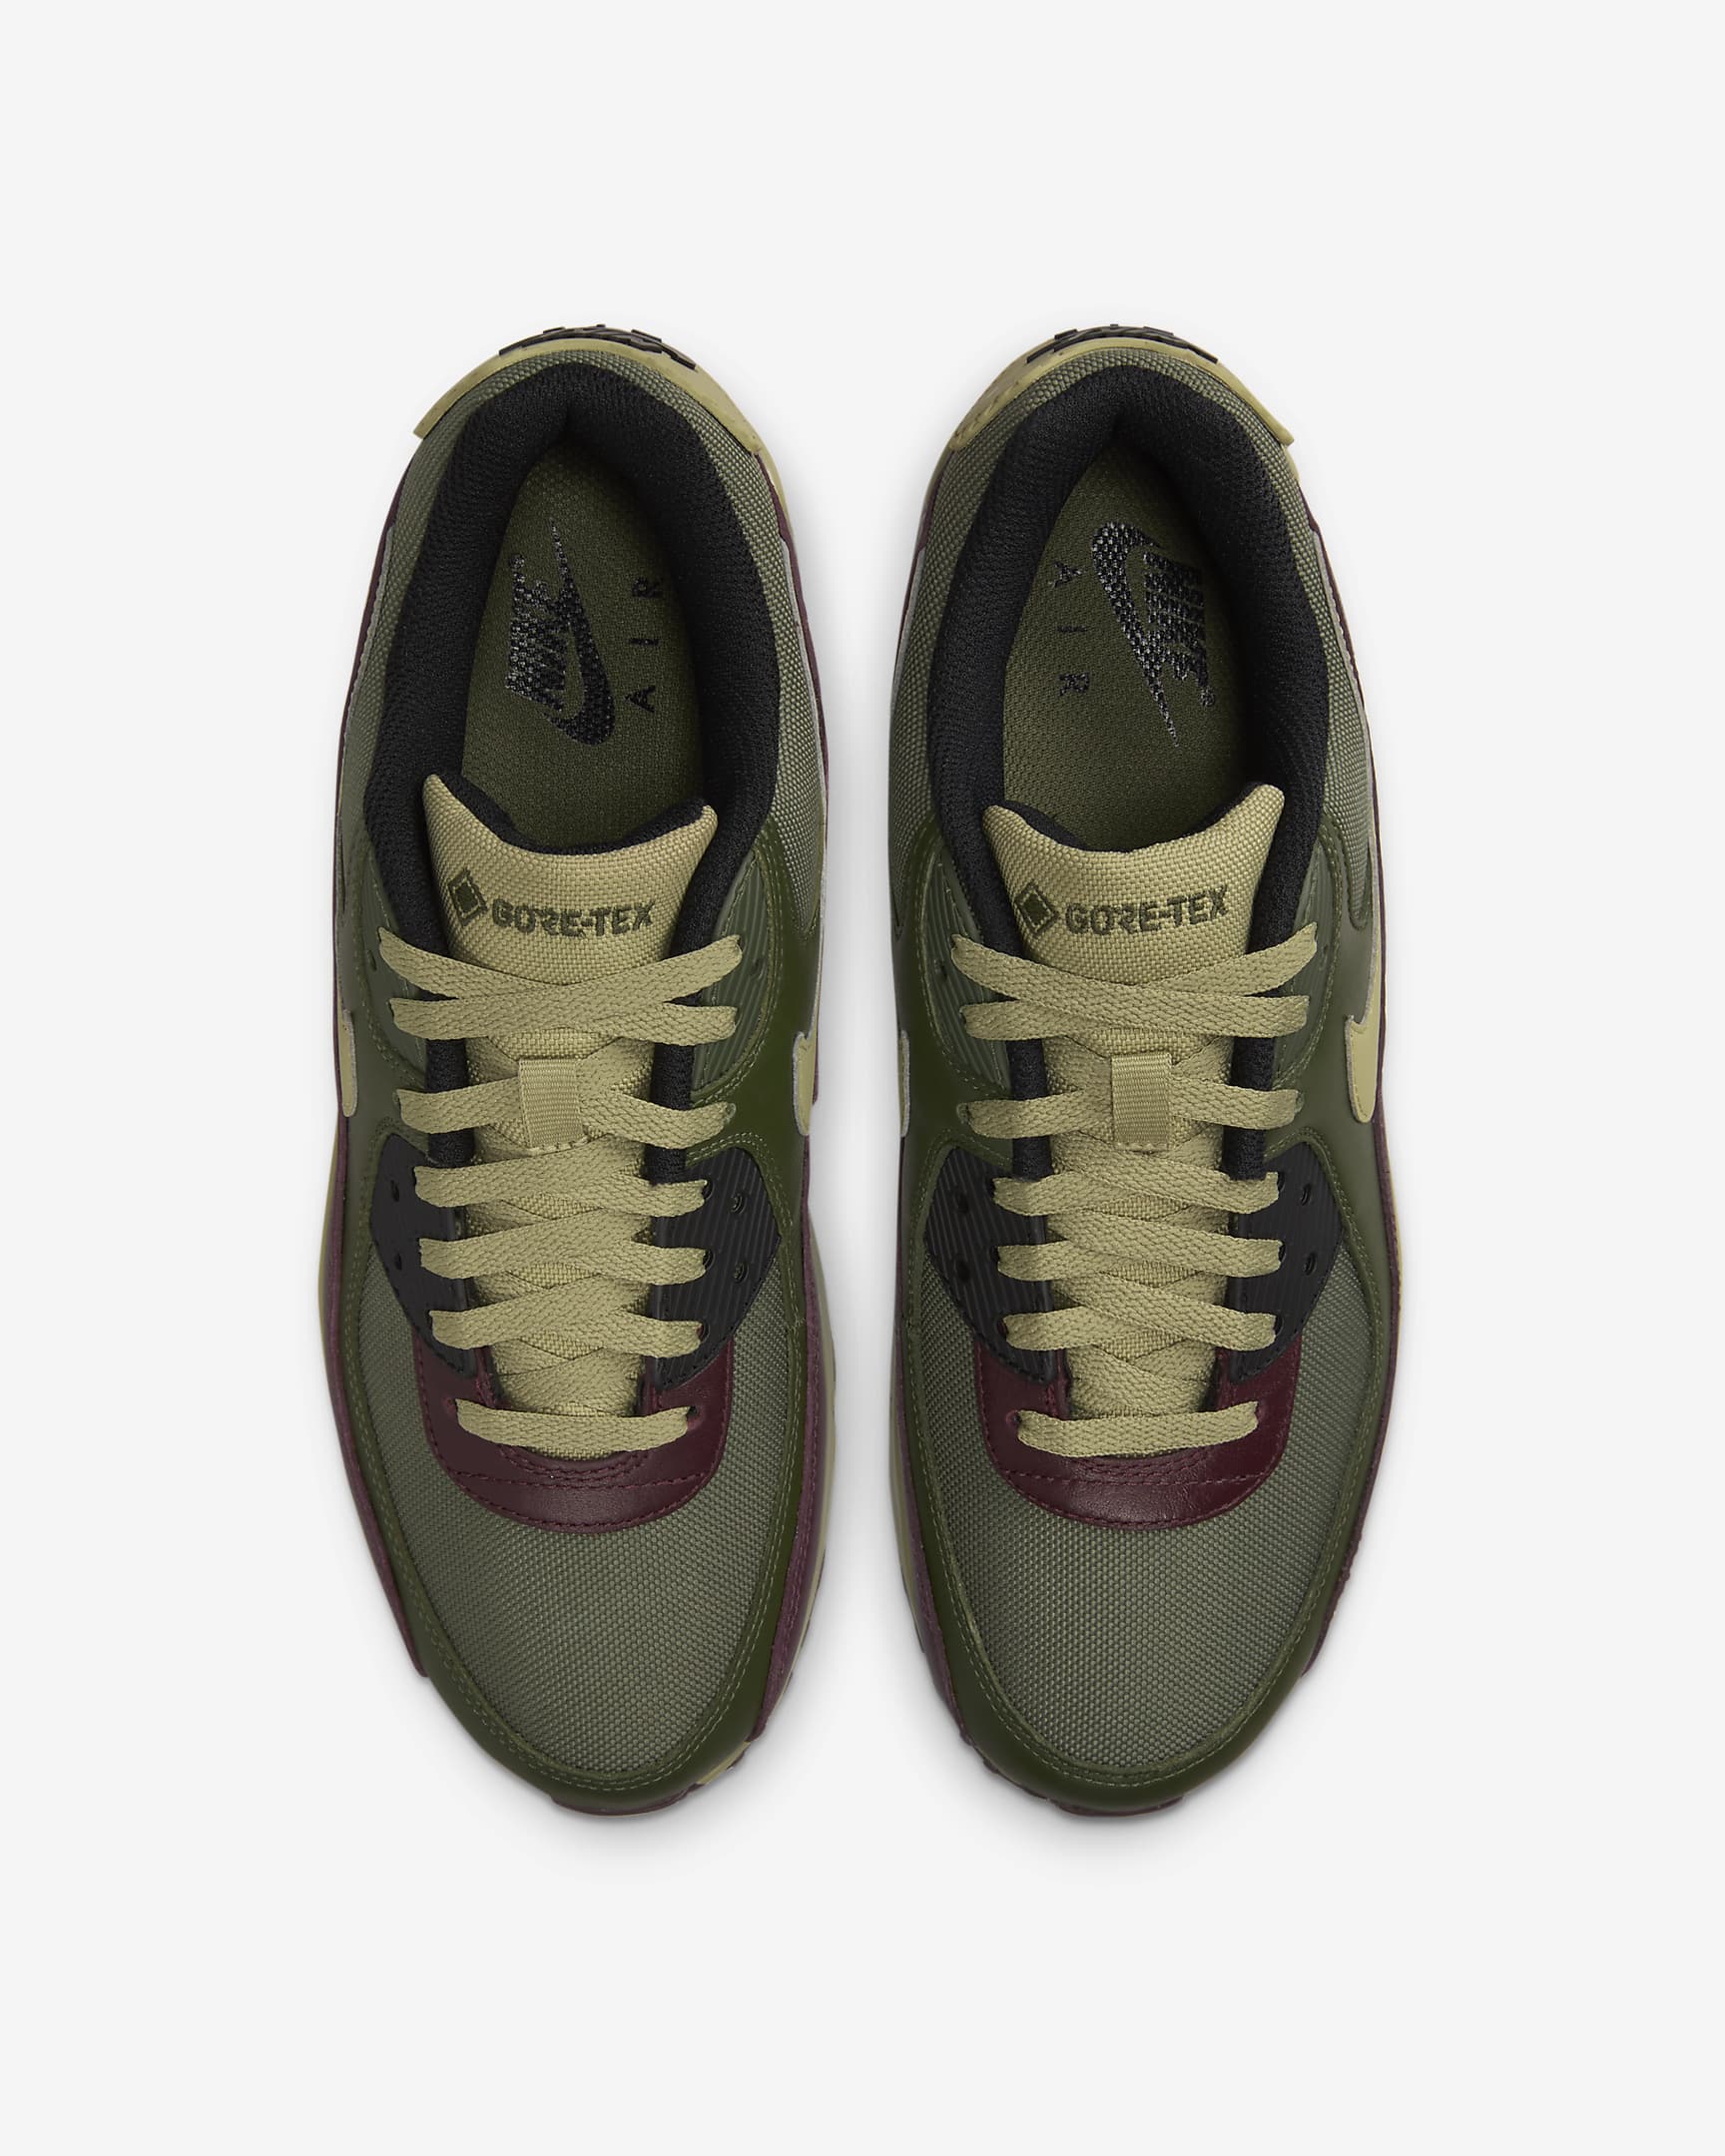 Nike Air Max 90 GORE-TEX Men's Shoes - Medium Olive/Cargo Khaki/Burgundy Crush/Neutral Olive